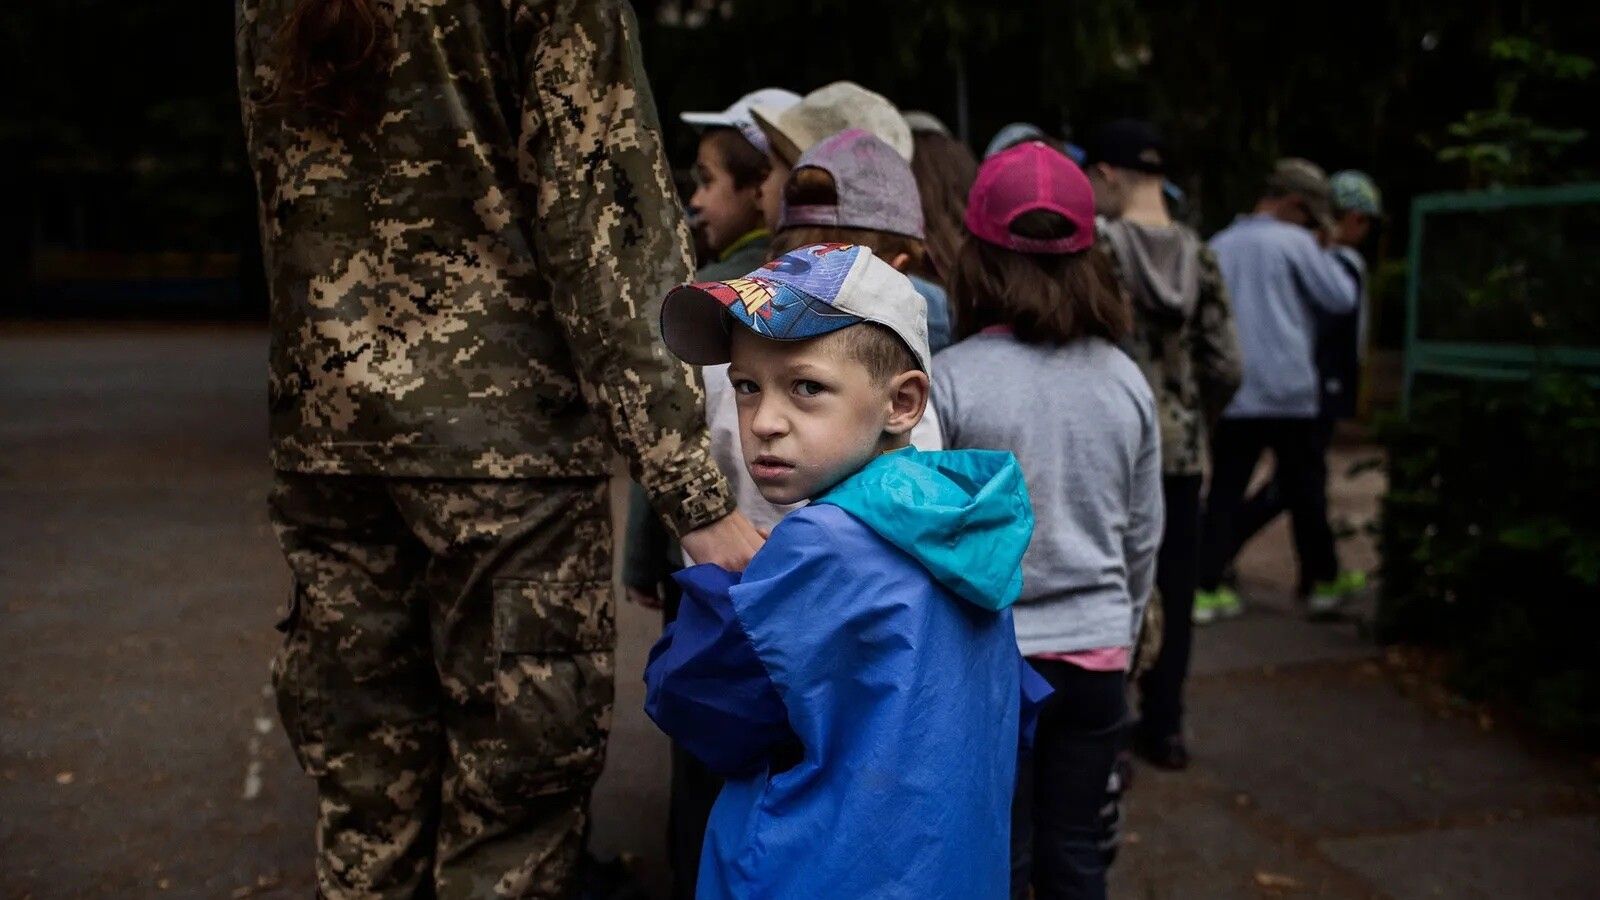 Guerra Russia-Ucraina, bambini diventati bottino di guerra